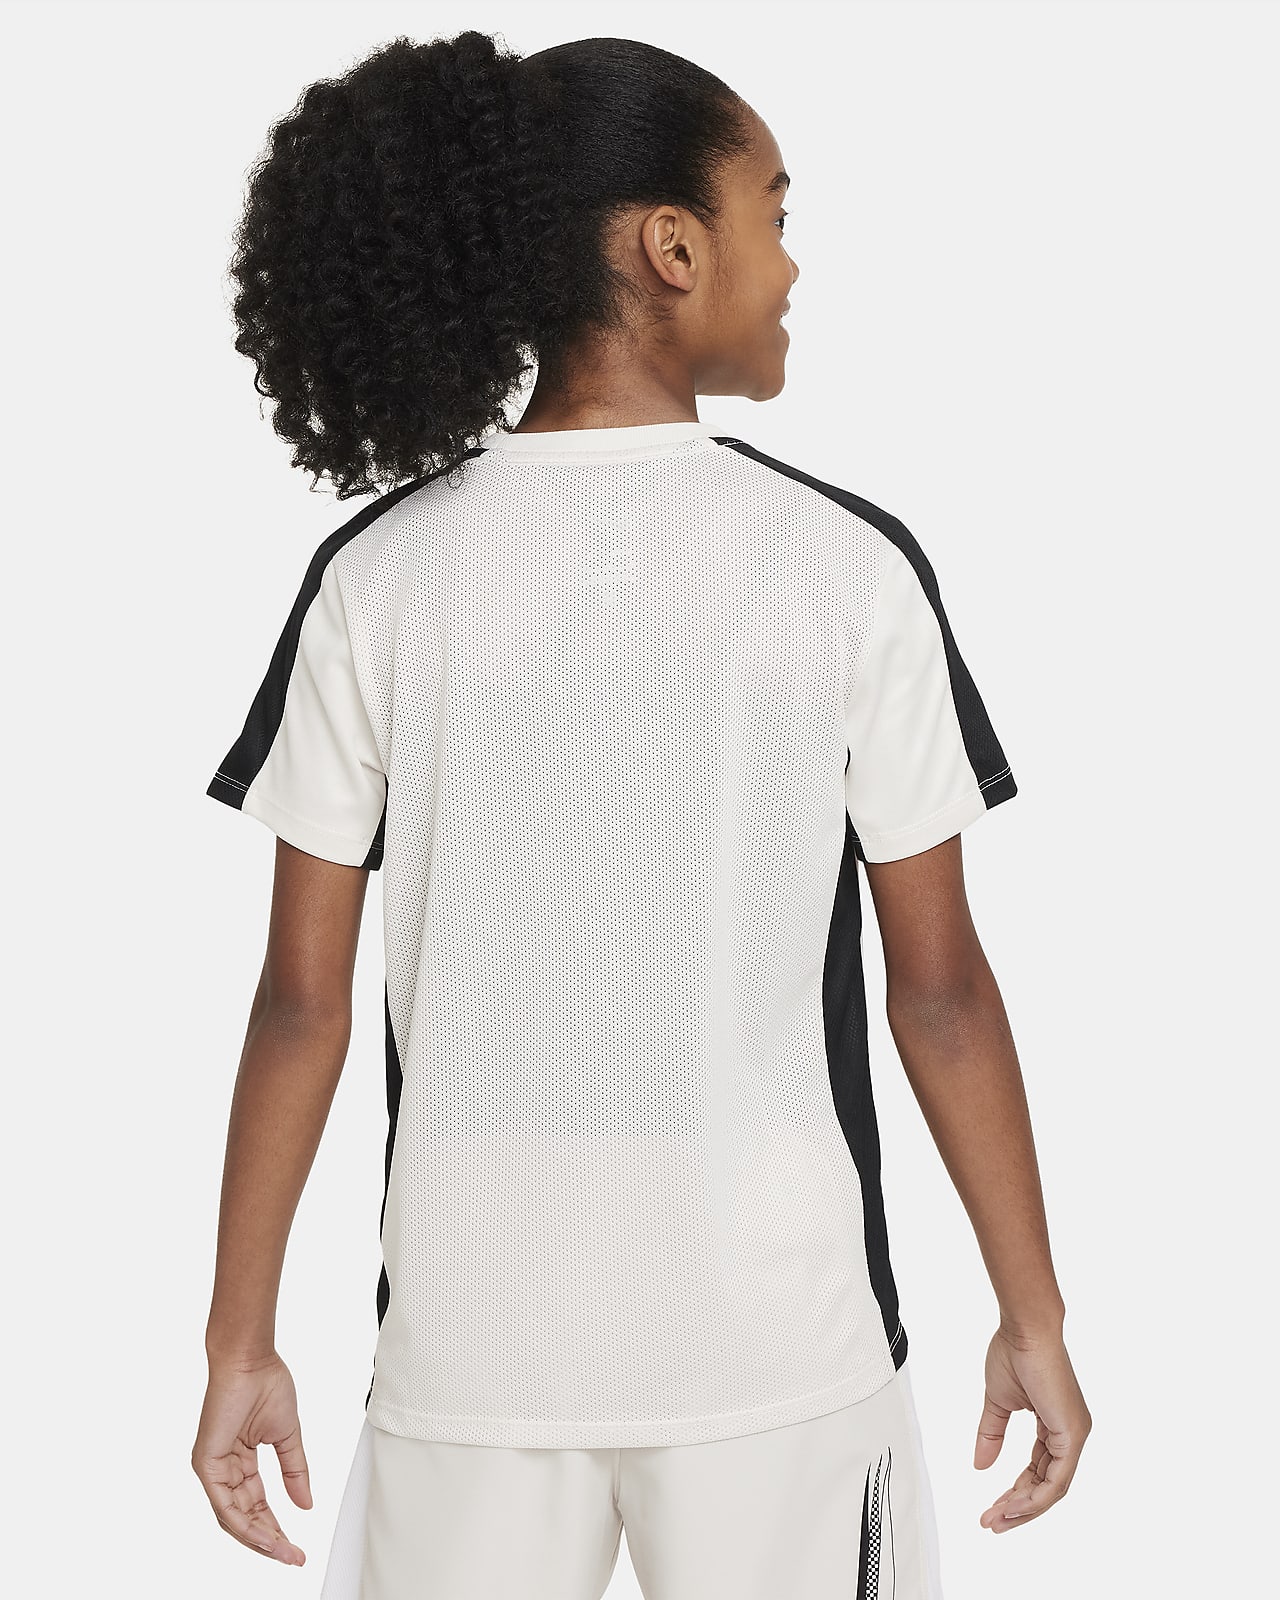 KM Dri-FIT Camiseta de fútbol - Niño/a. Nike ES